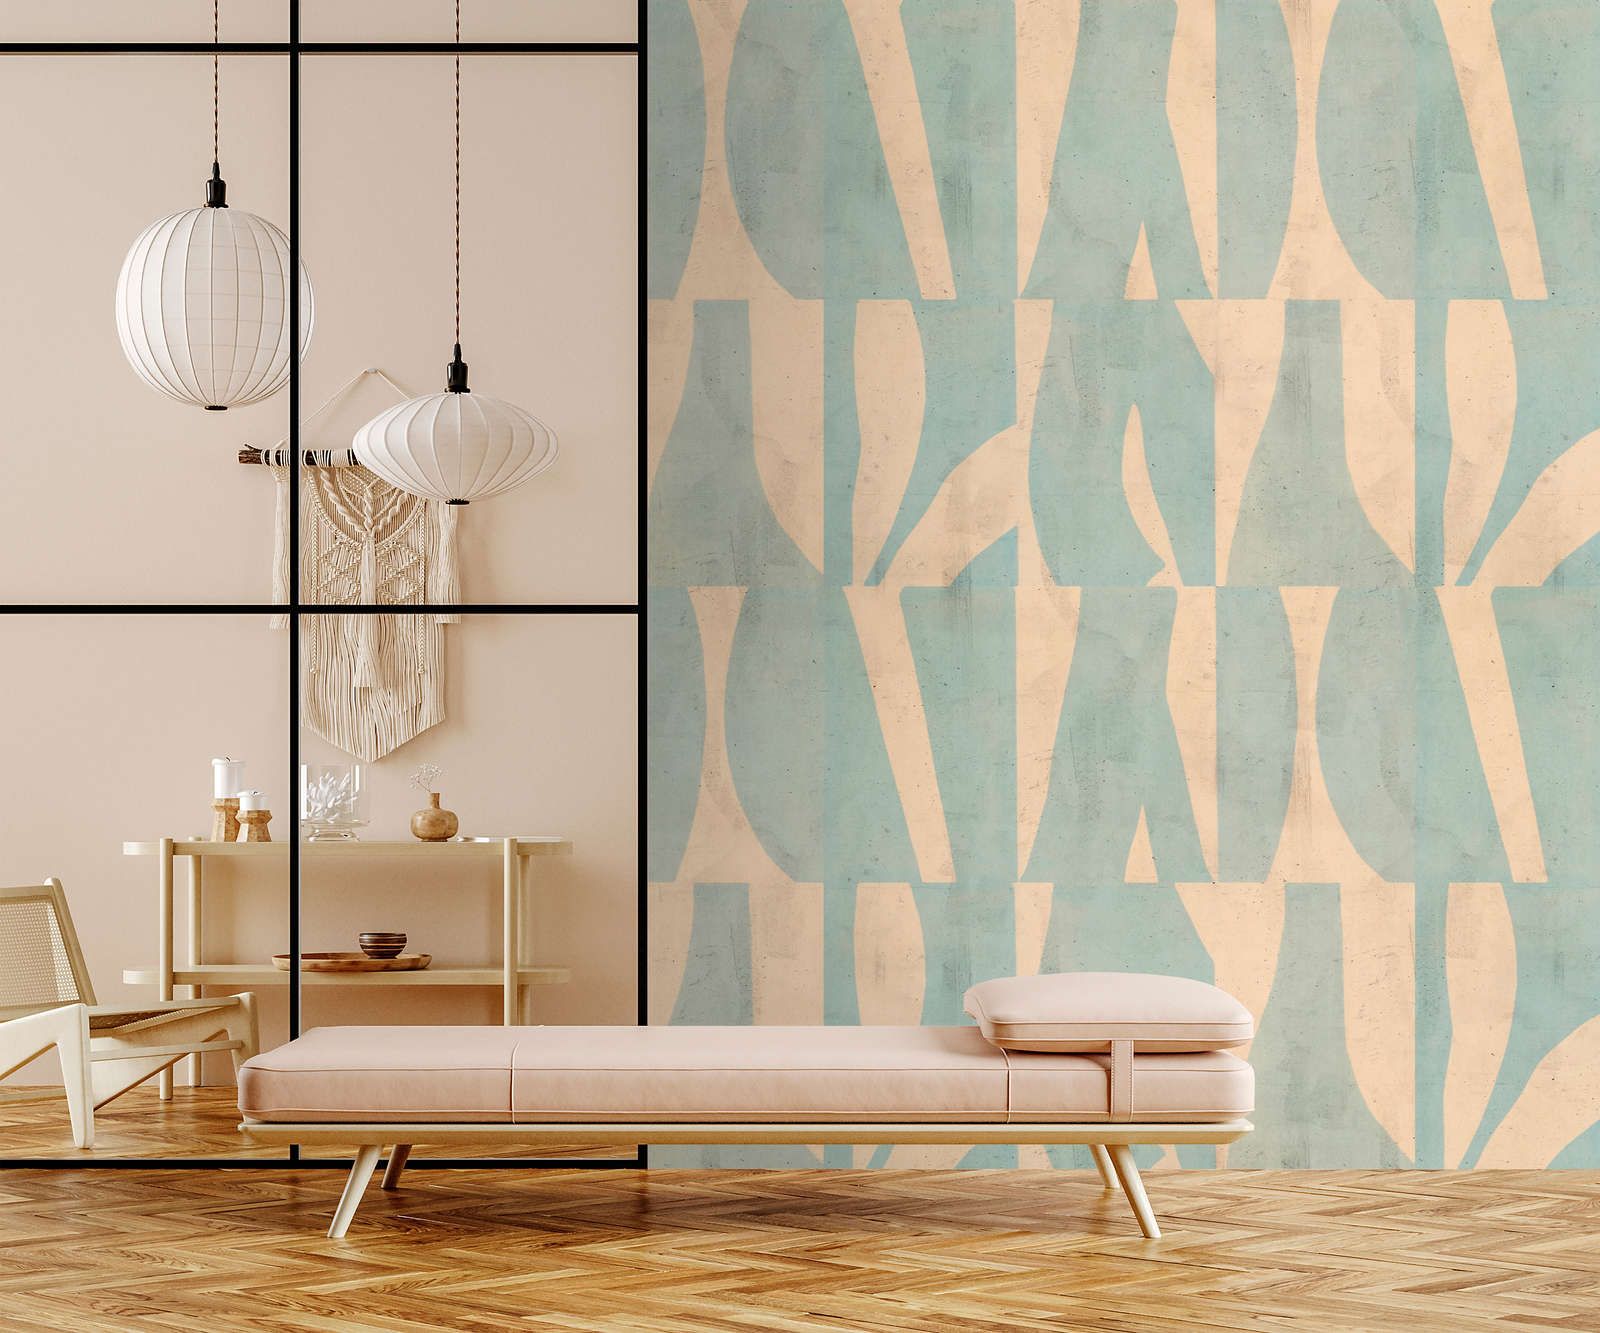             Photo wallpaper »laila« - Graphic pattern on concrete plaster texture - Beige, mint green | matt, smooth non-woven fabric
        